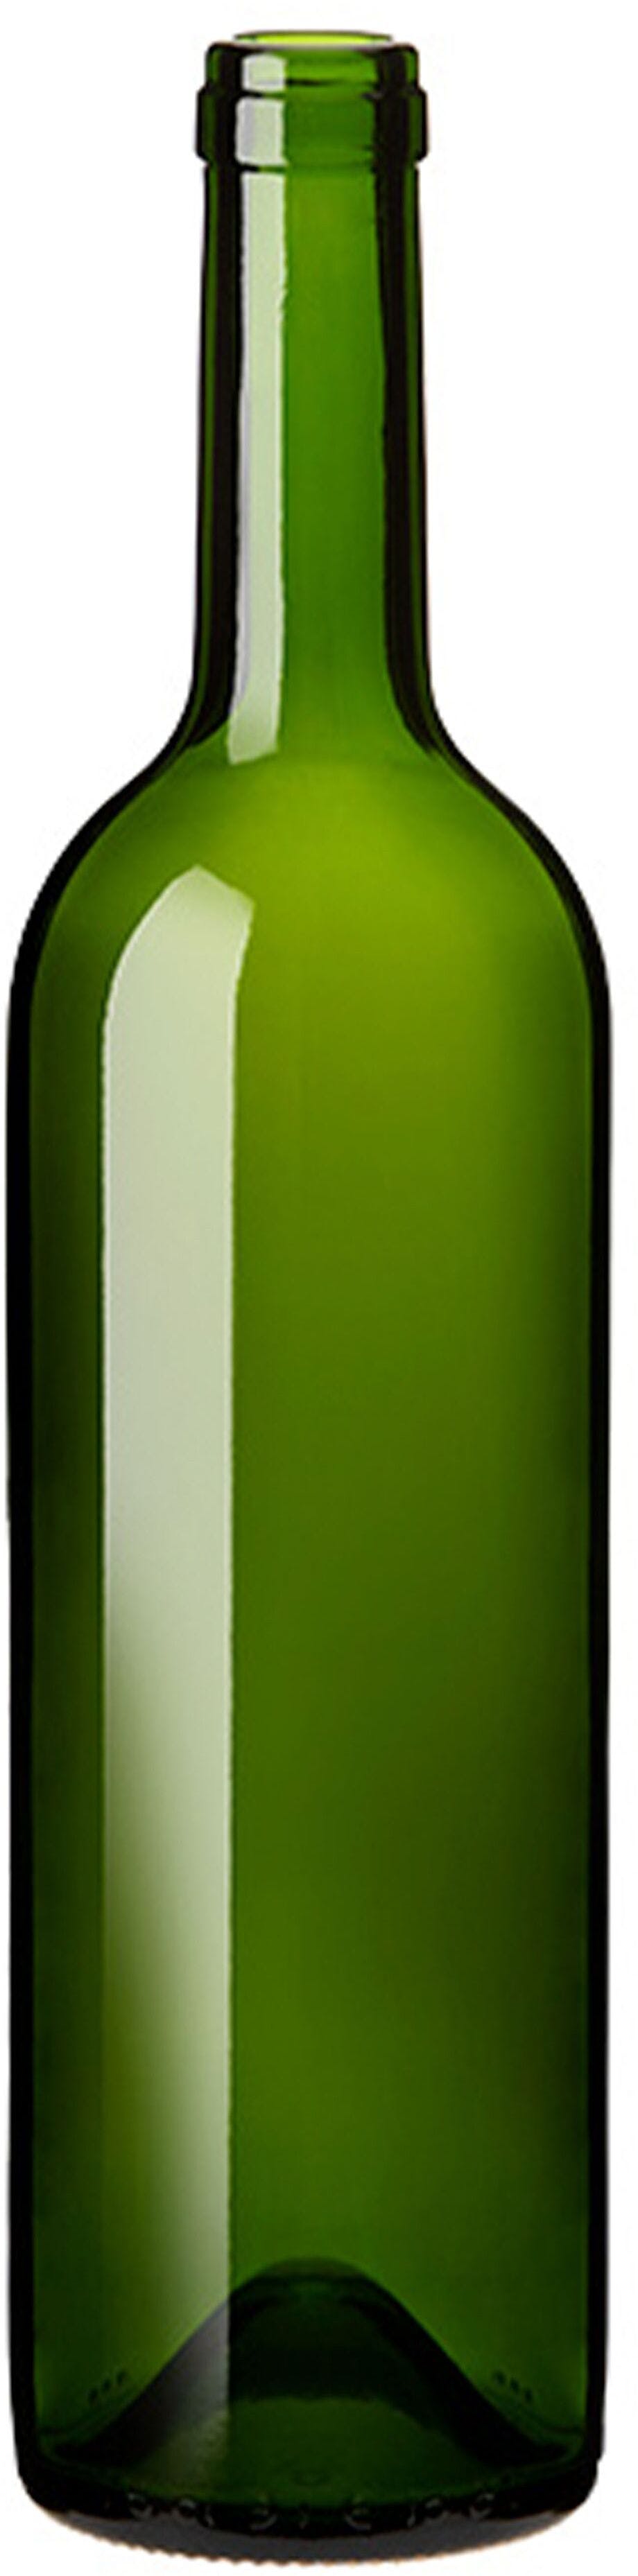 Bottle BORD SEDUCCION 750 S VV